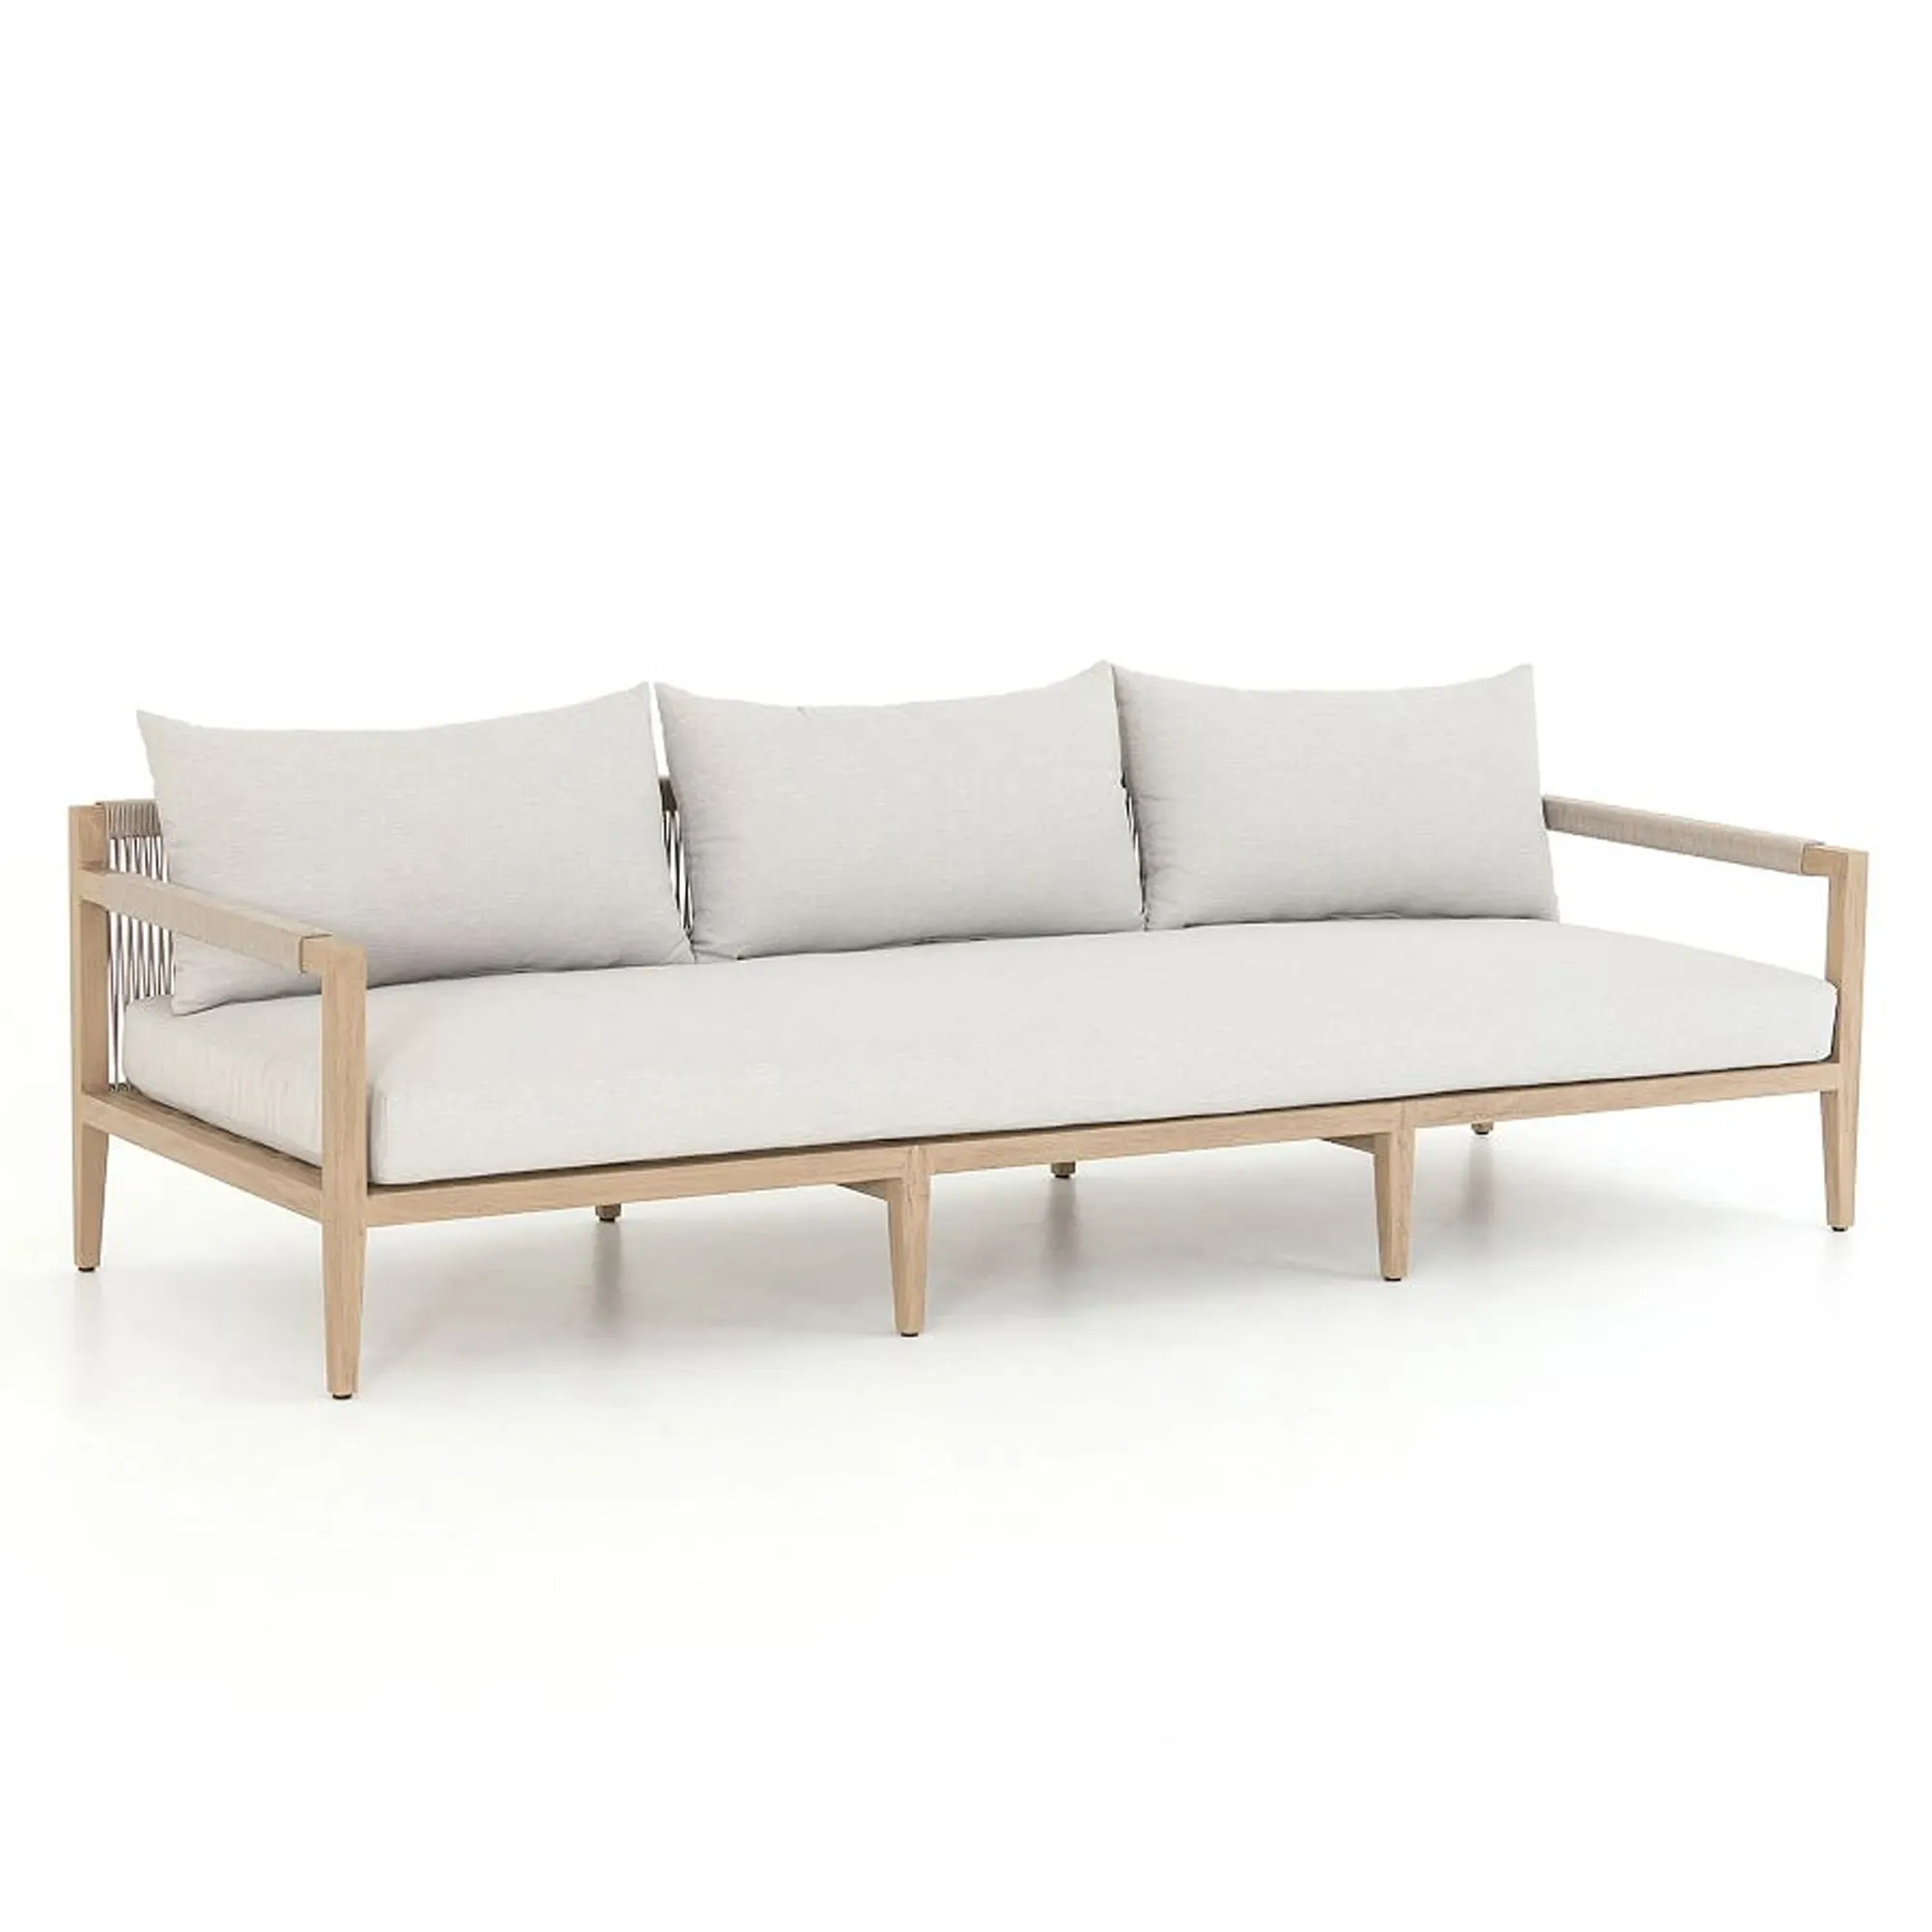 Modernes Sofa Outdoor Dreisitzer Patio Garden - Ethan